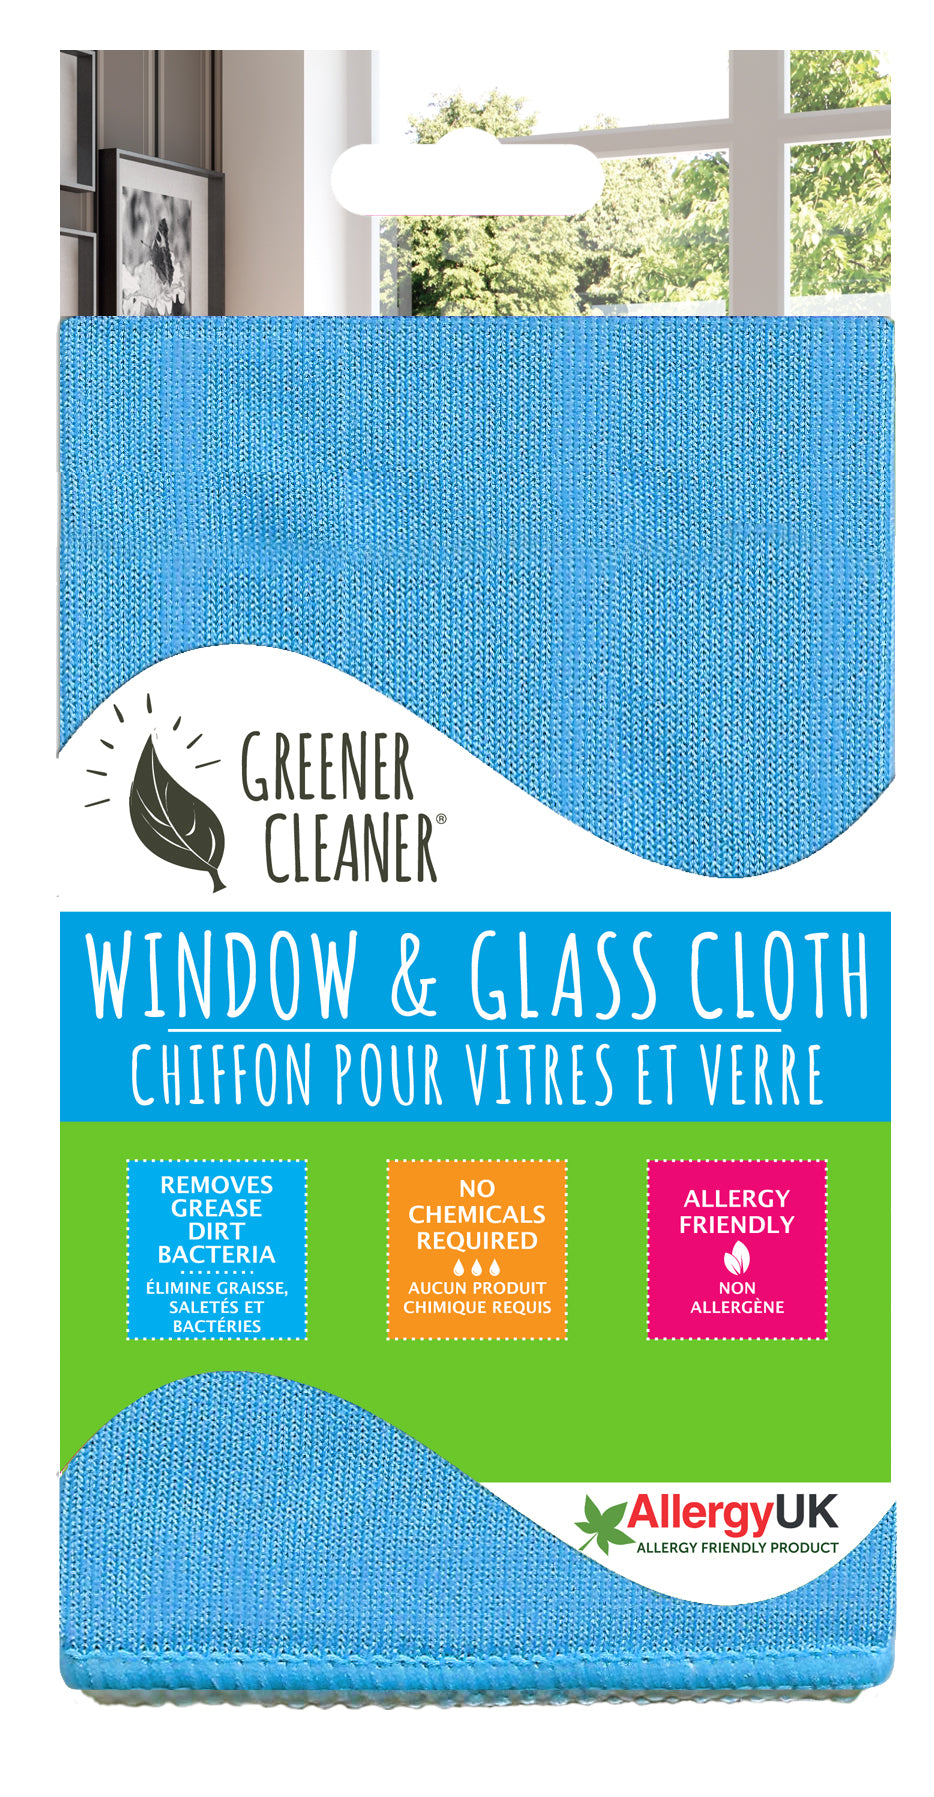 Window and Glass Cloth